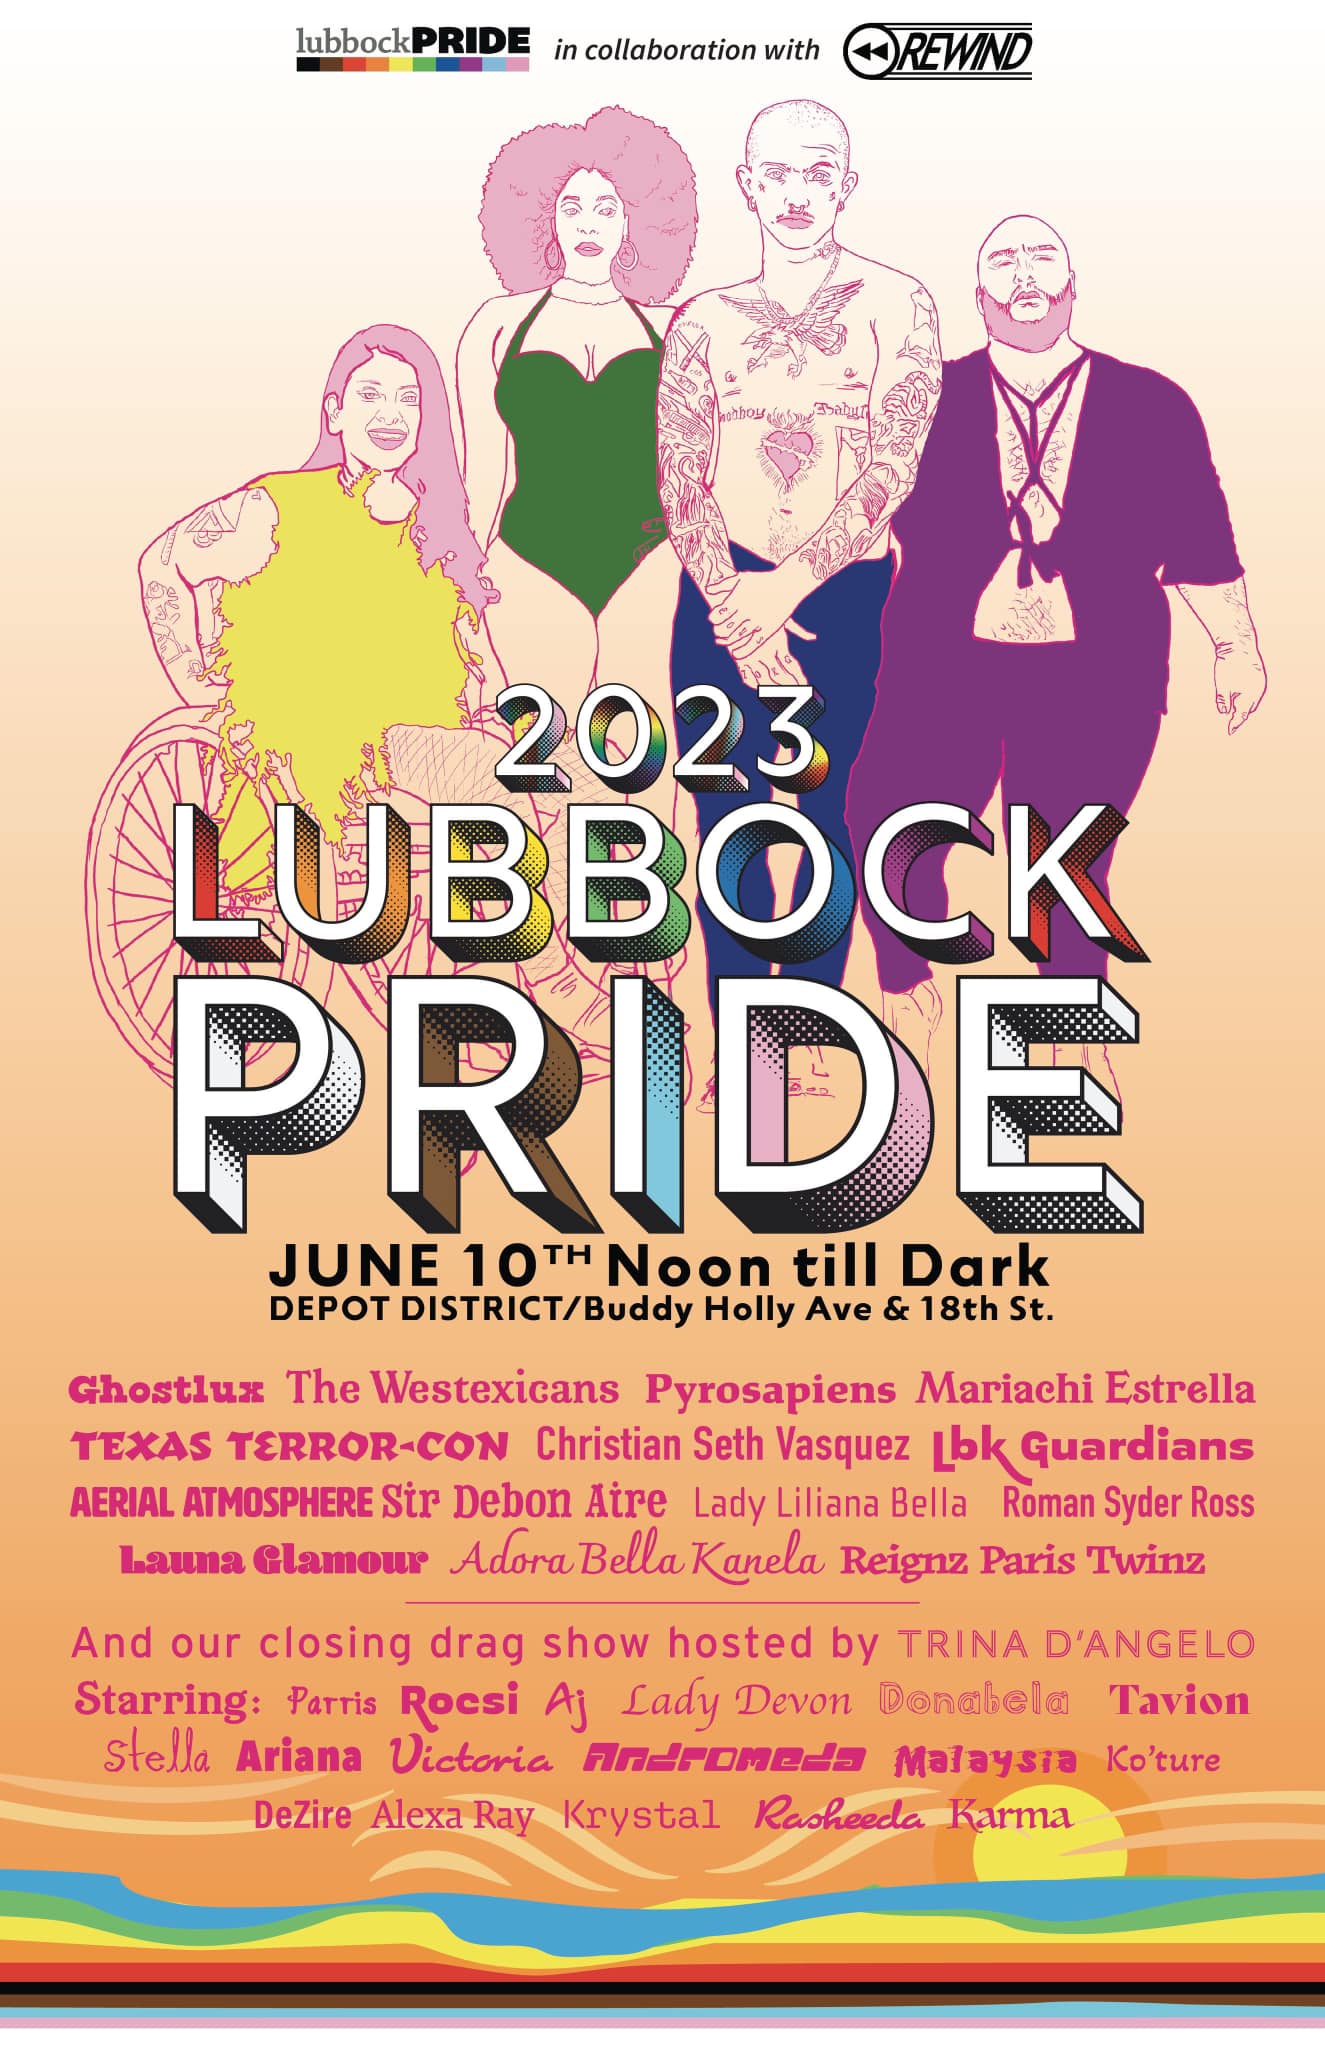 Lubbock Pride 2023 Buddy Holly Avenue & 18th Street 12pm Lubbock